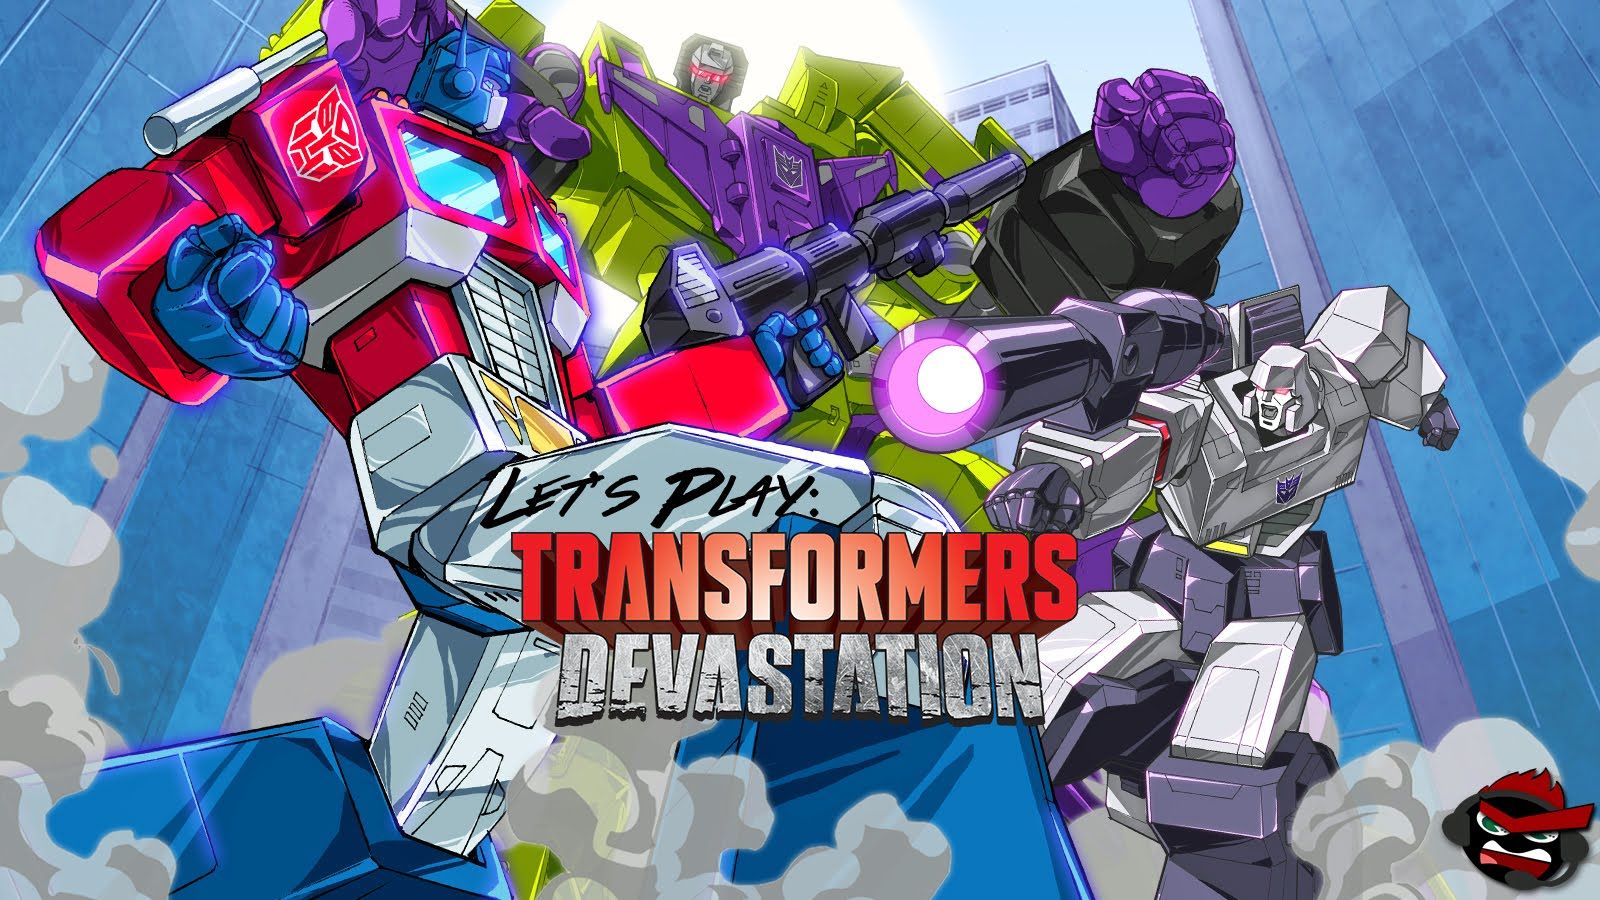 Let's Play Devastation. Transformers, Gaming pc, Devastation